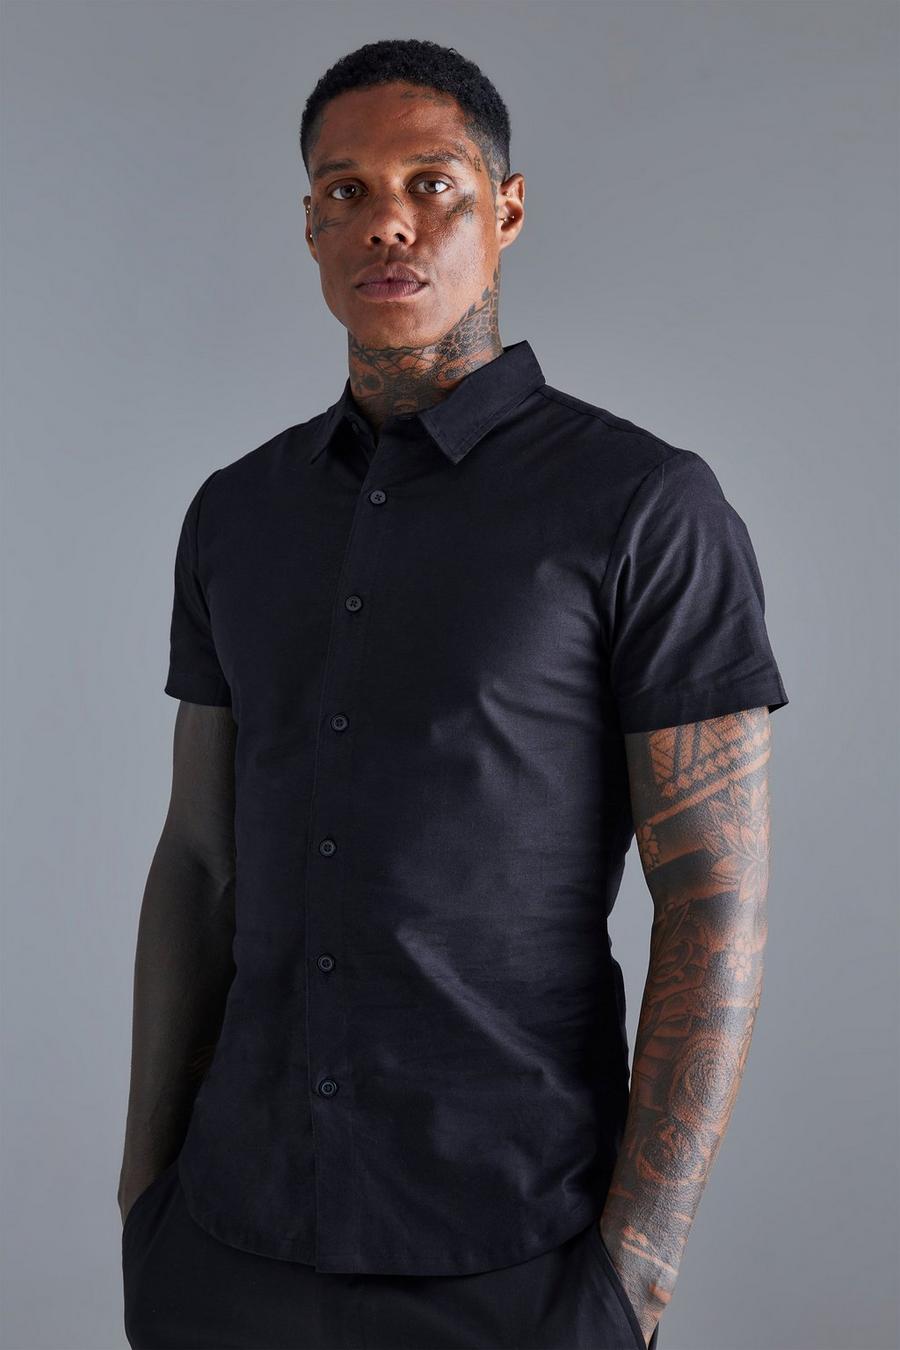 Black nero Short Sleeve Muscle Shirt